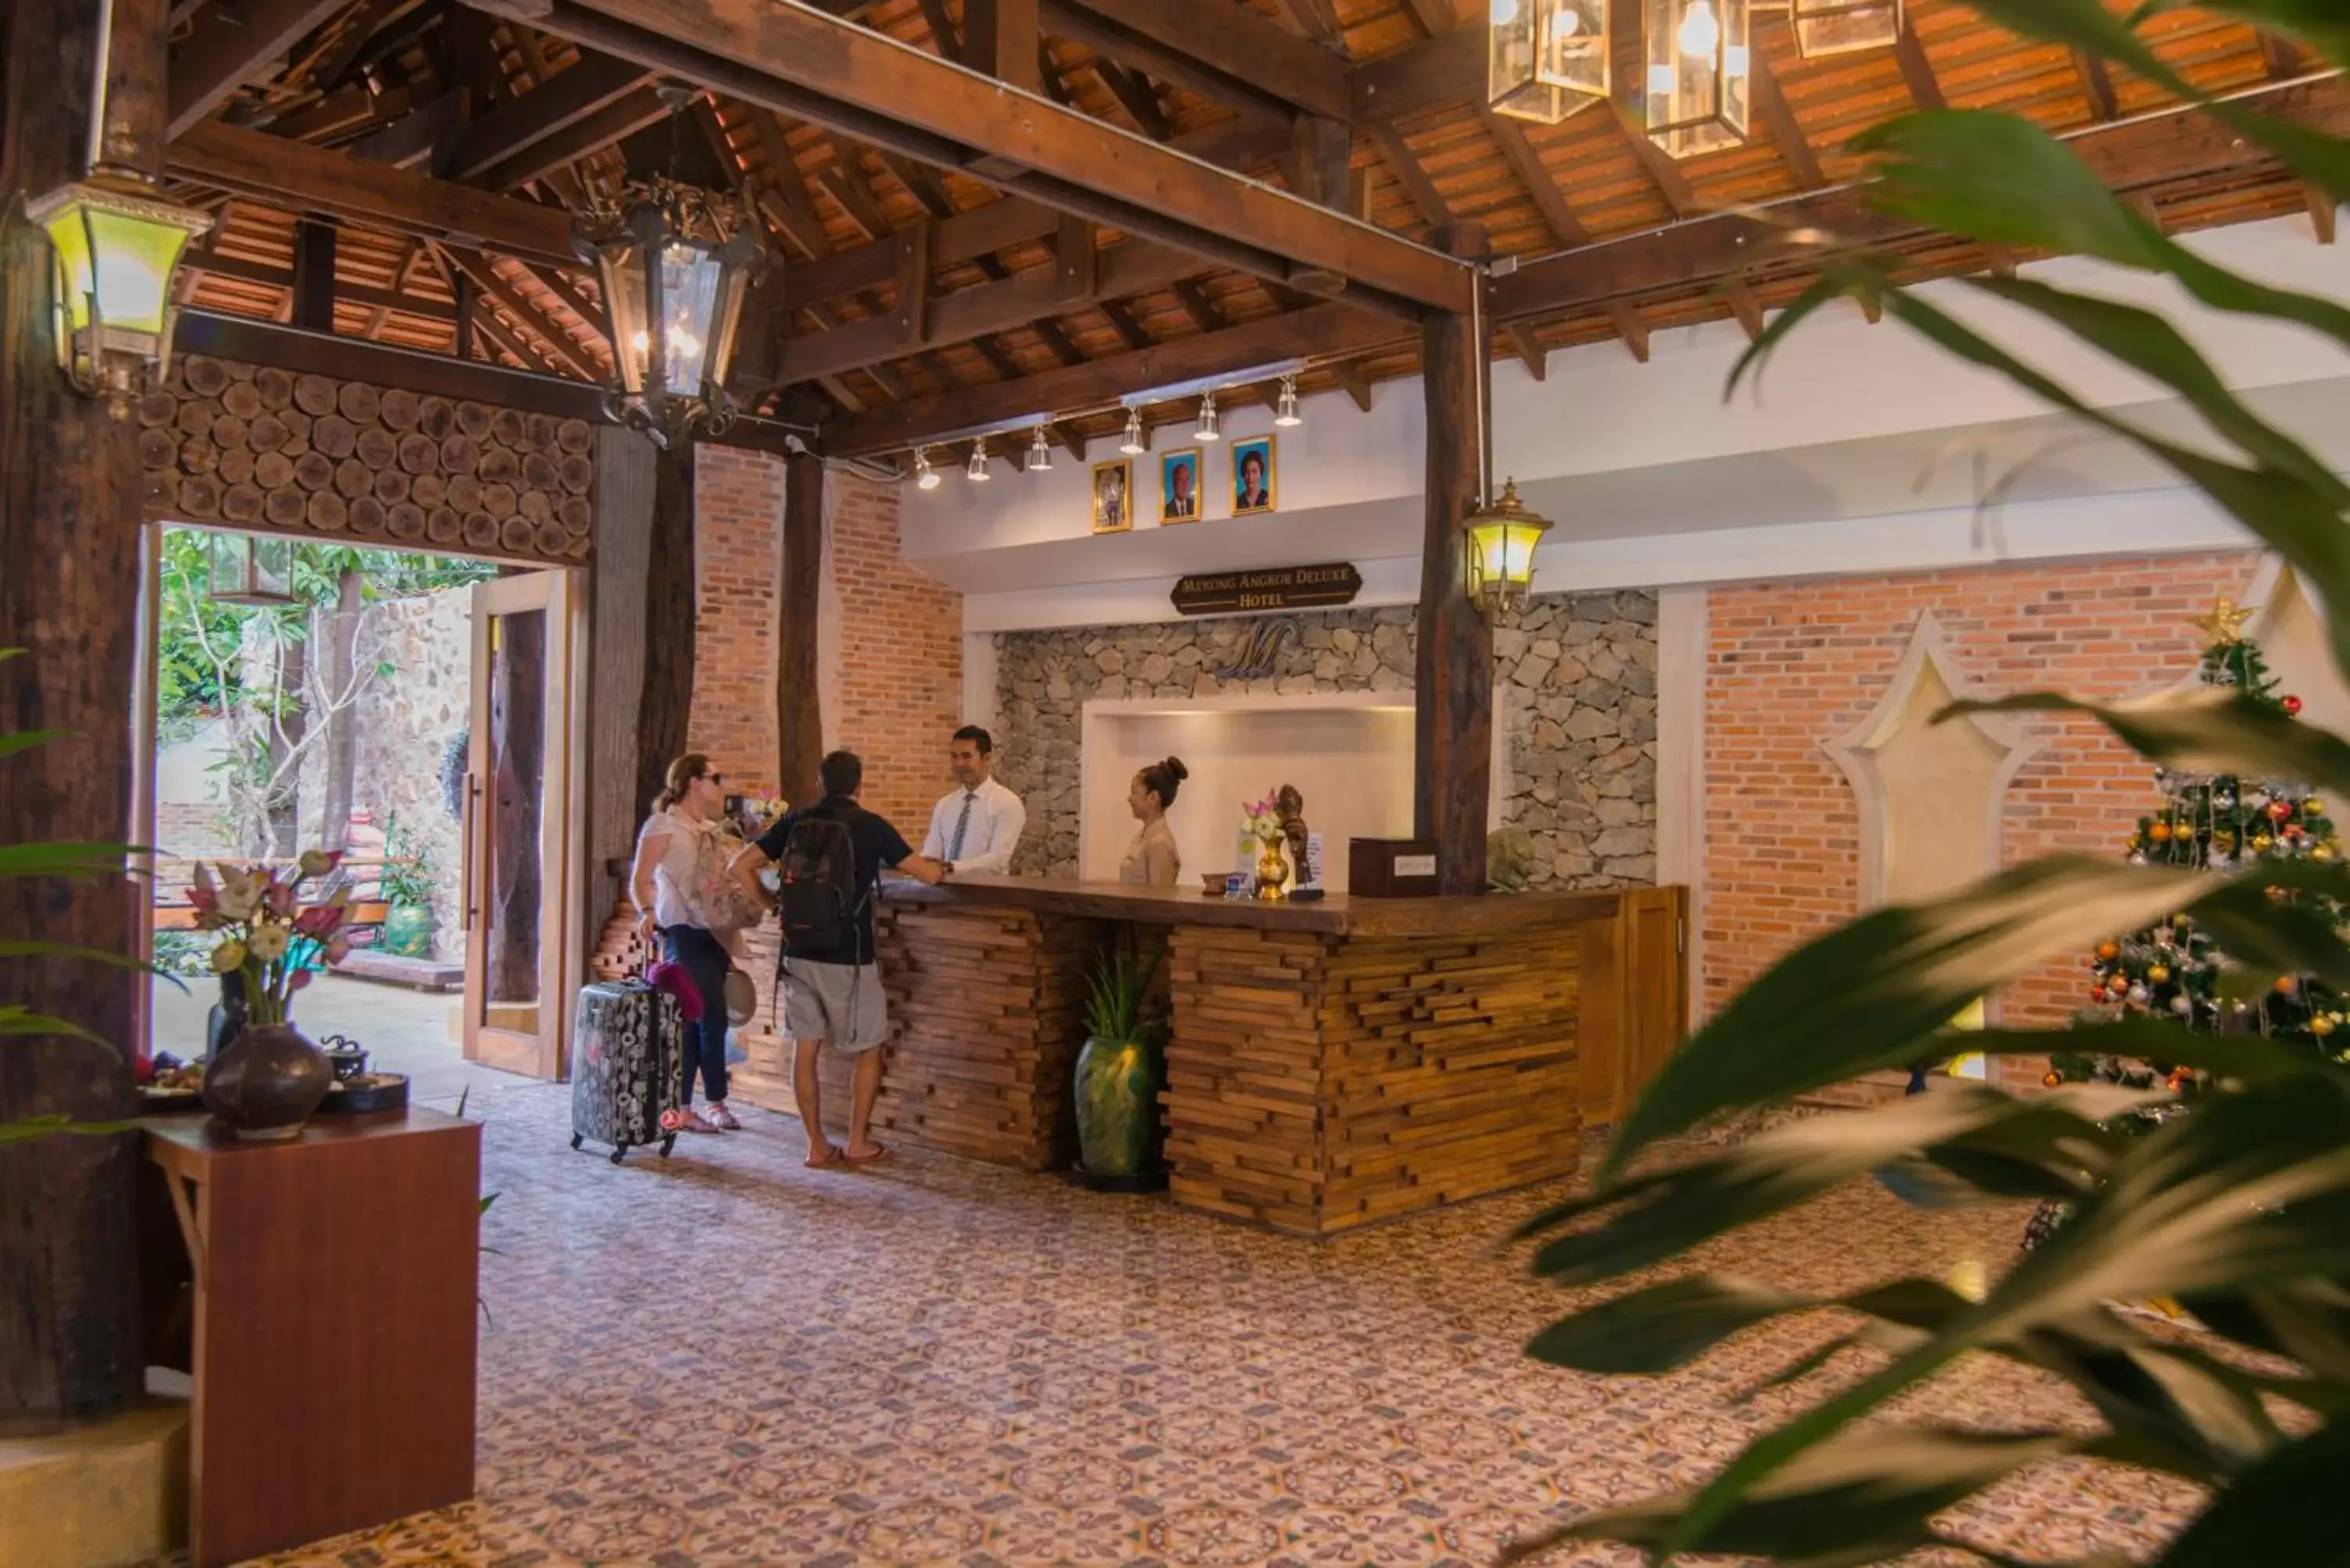 Lobby or reception in Mekong Angkor Palace Hotel